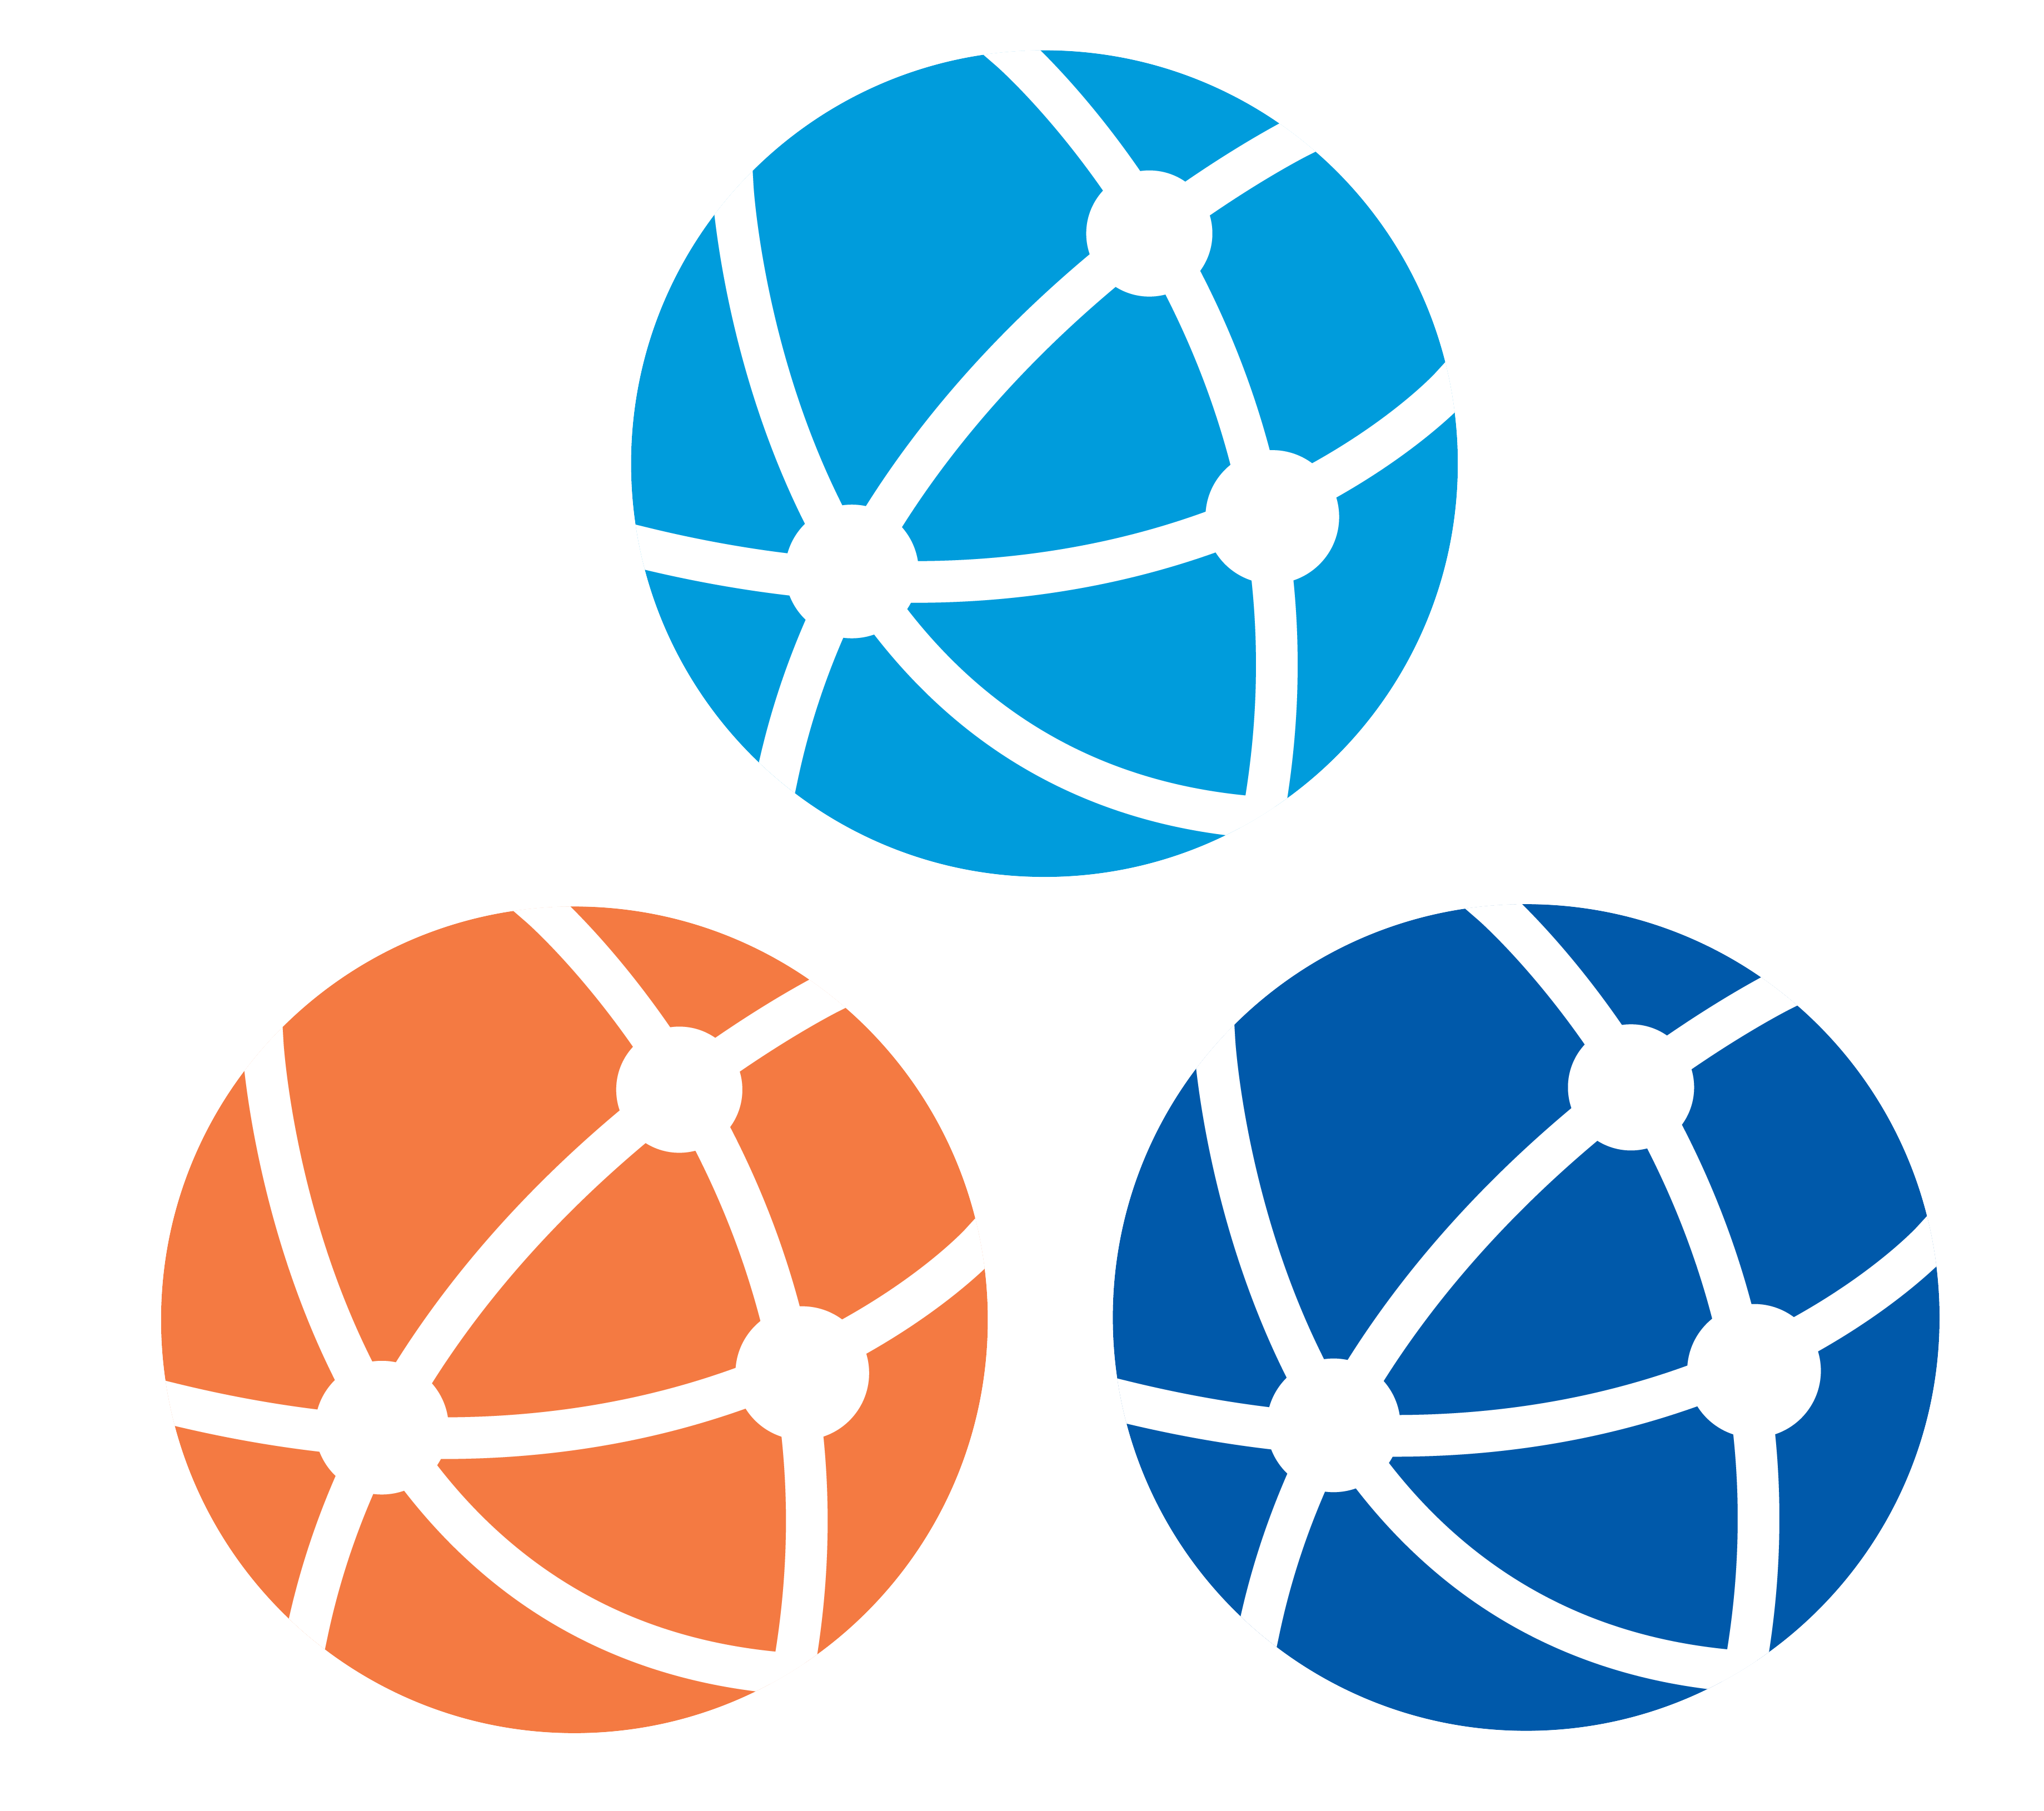 Three globes icon